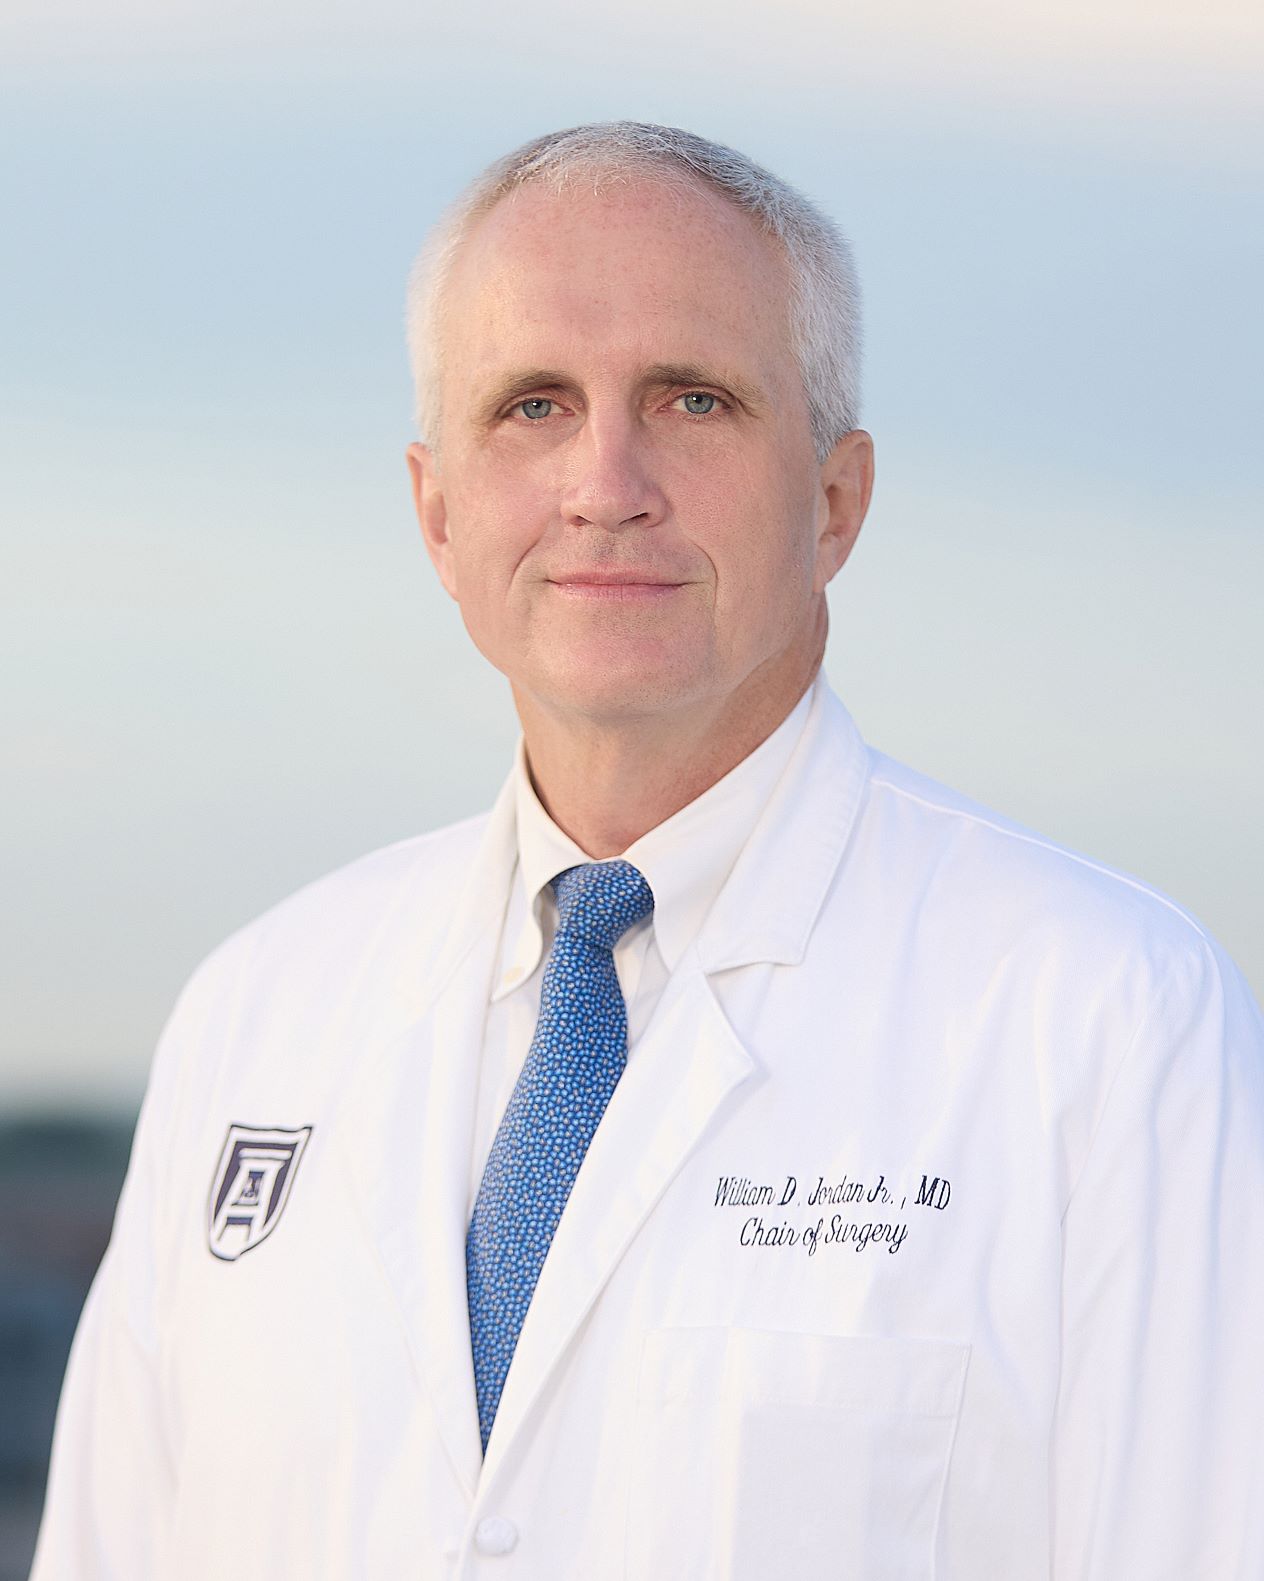 photo of William D. Jordan Jr., MD